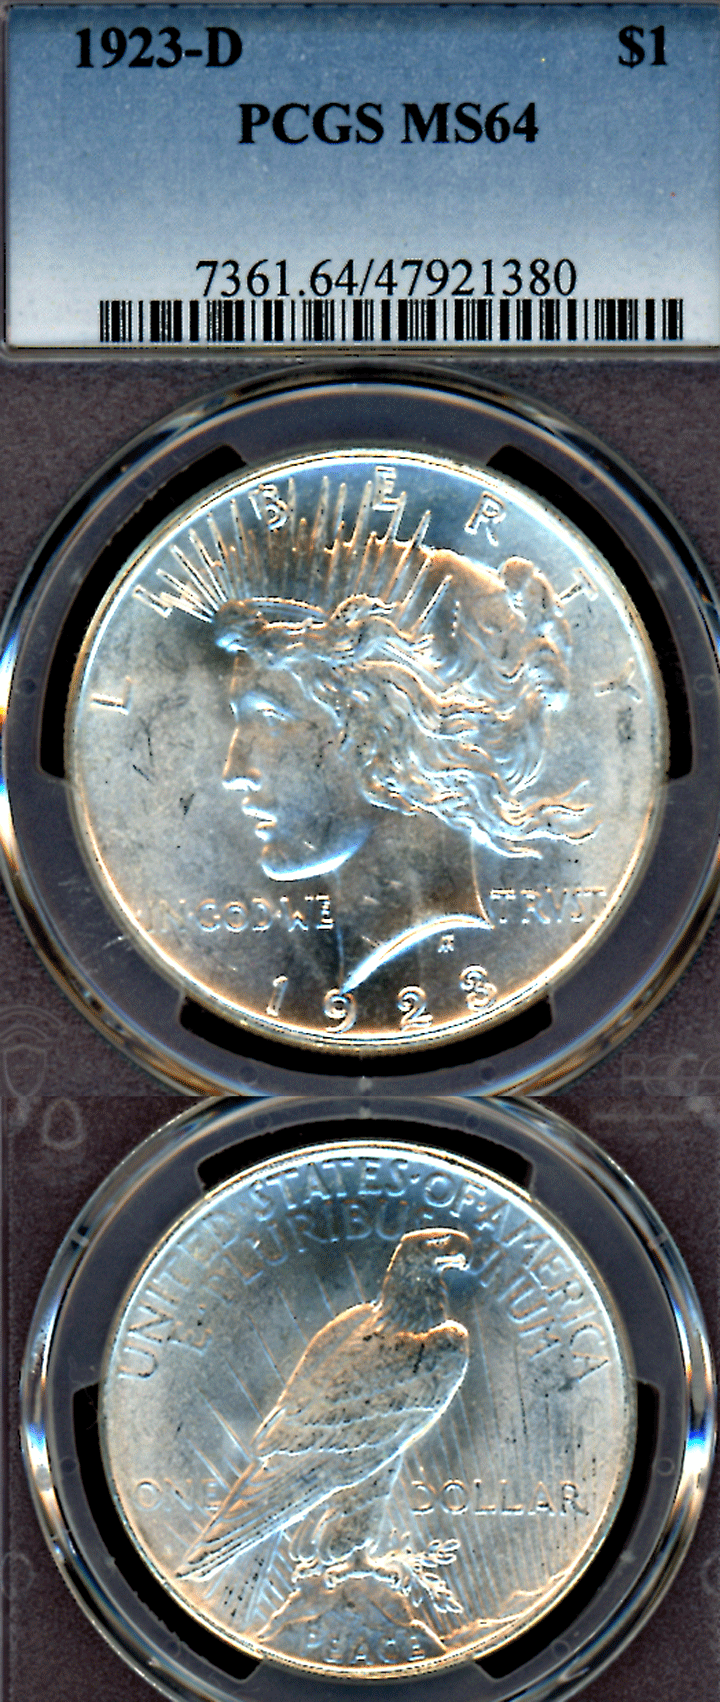 1923-D $ Peace silver dollar PCGS MS 64